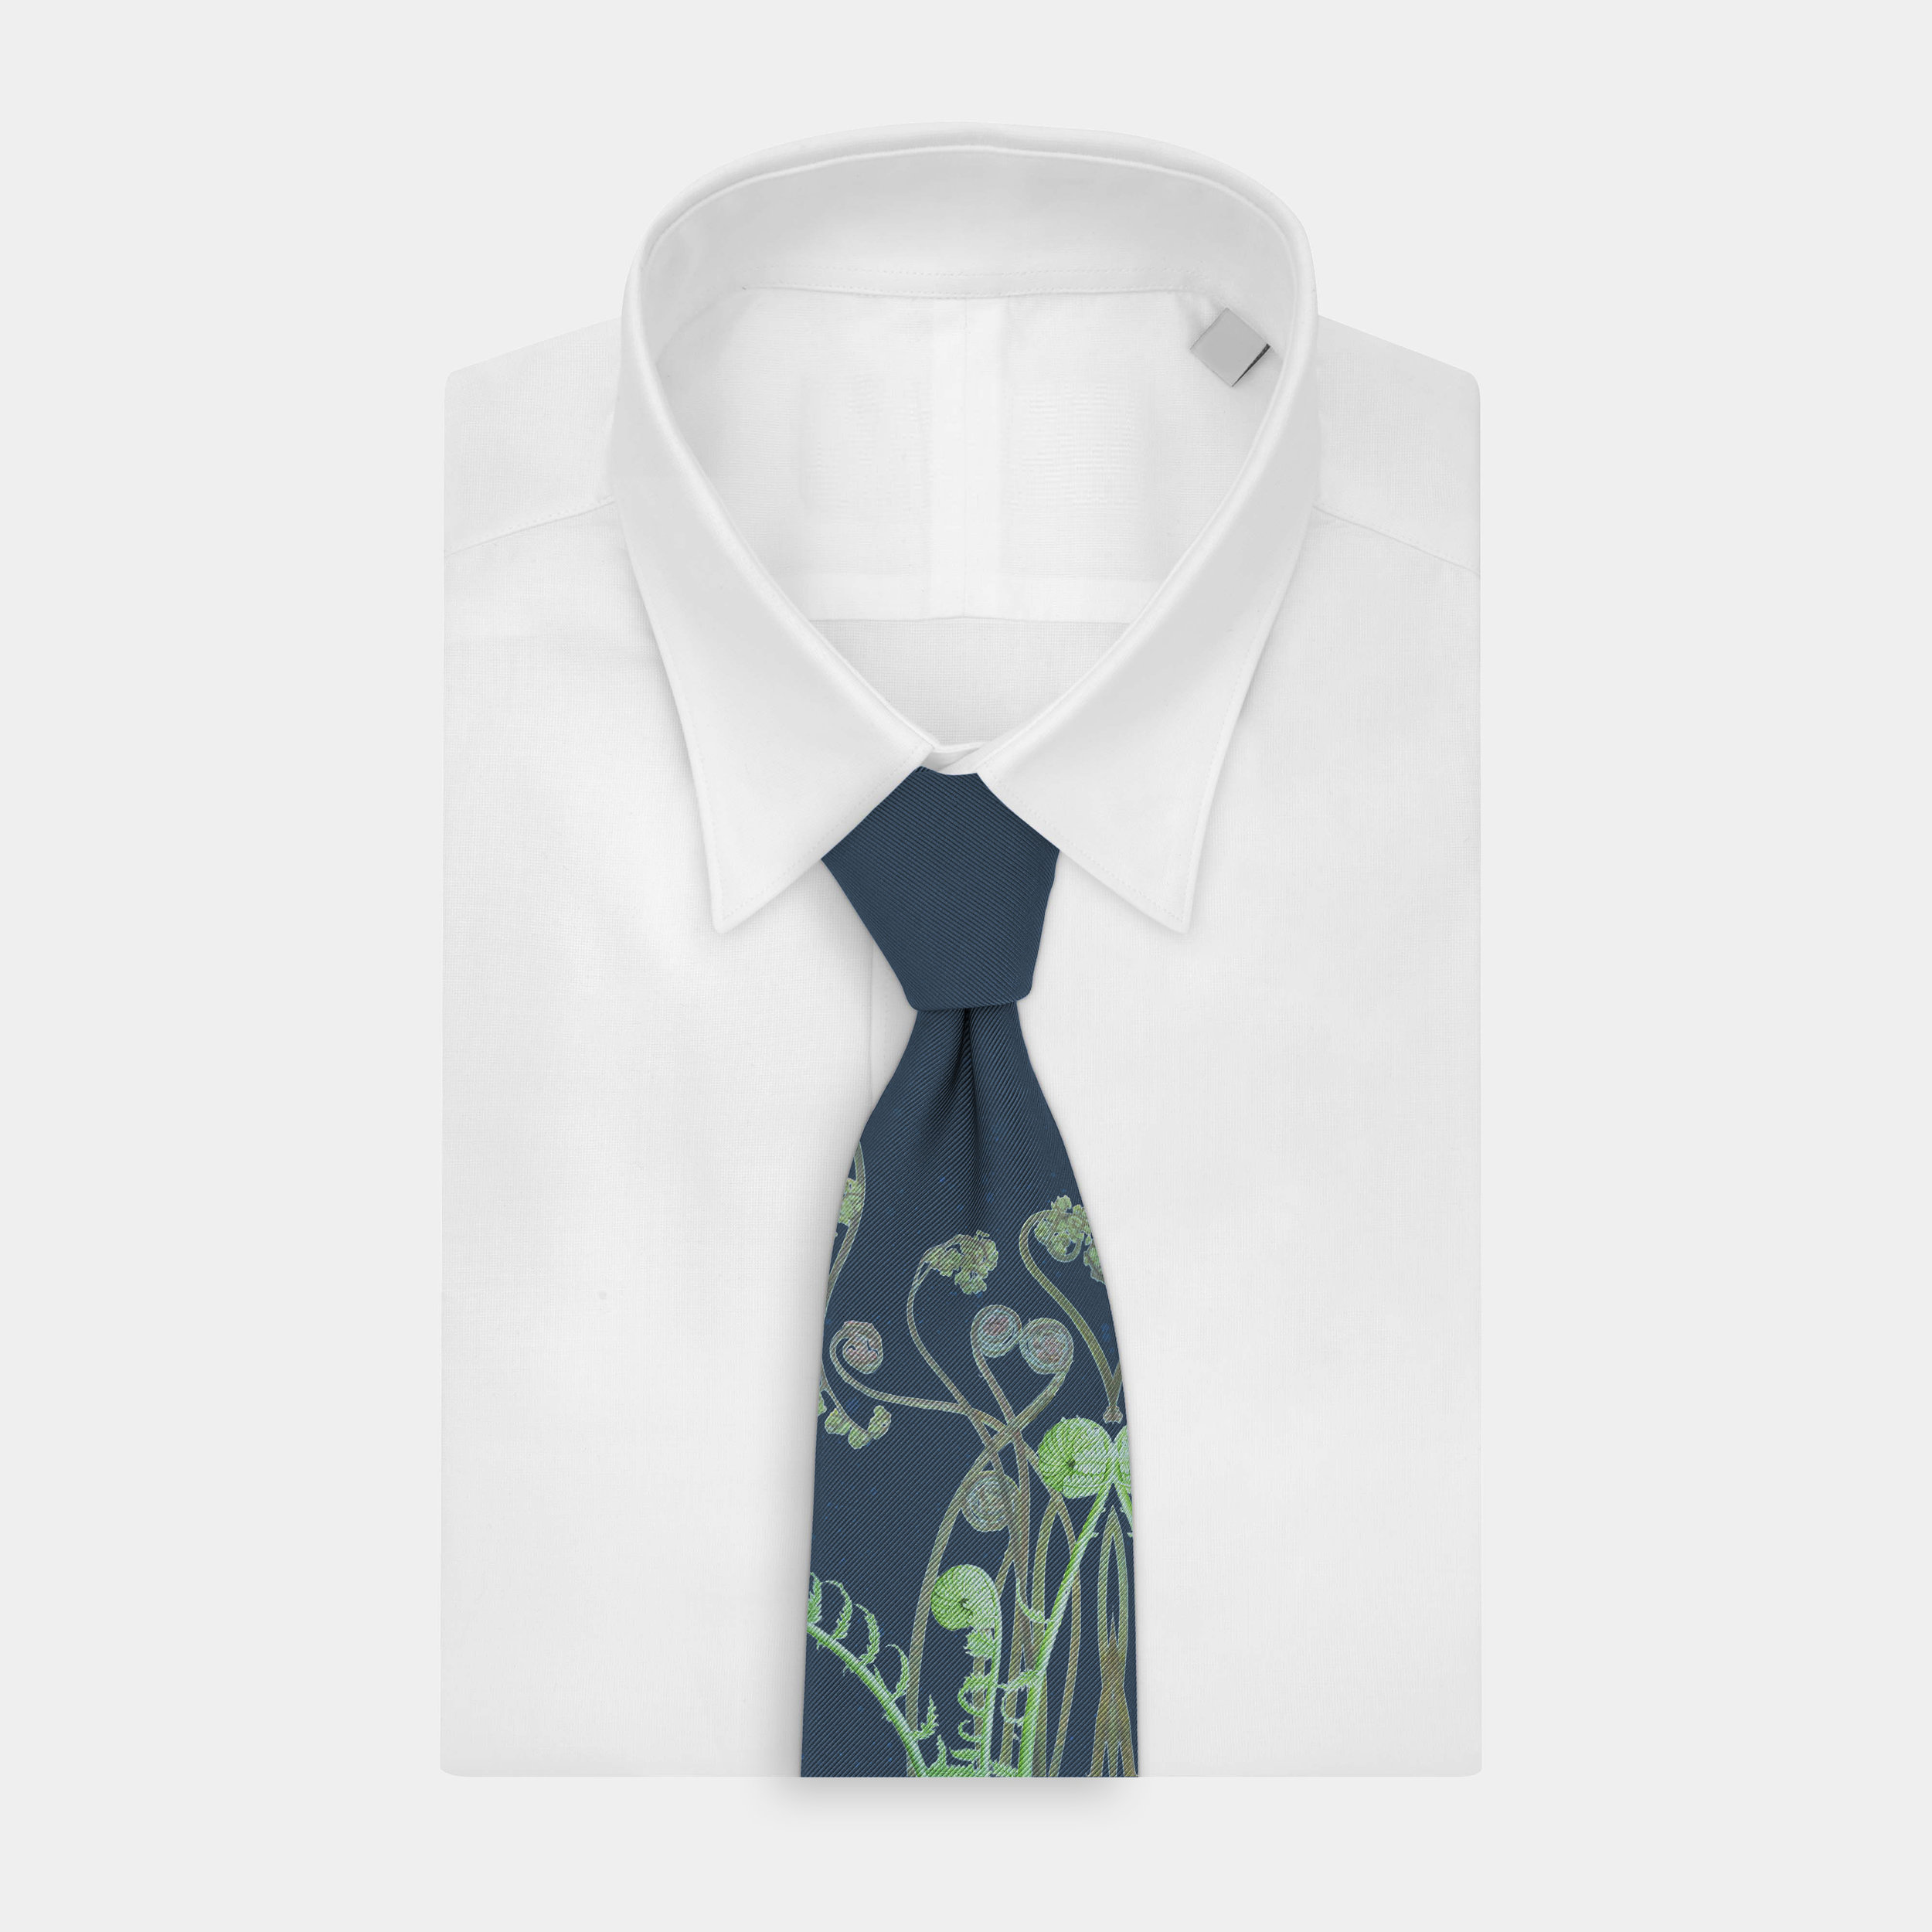 Unfernl Tie&Shirt.jpg